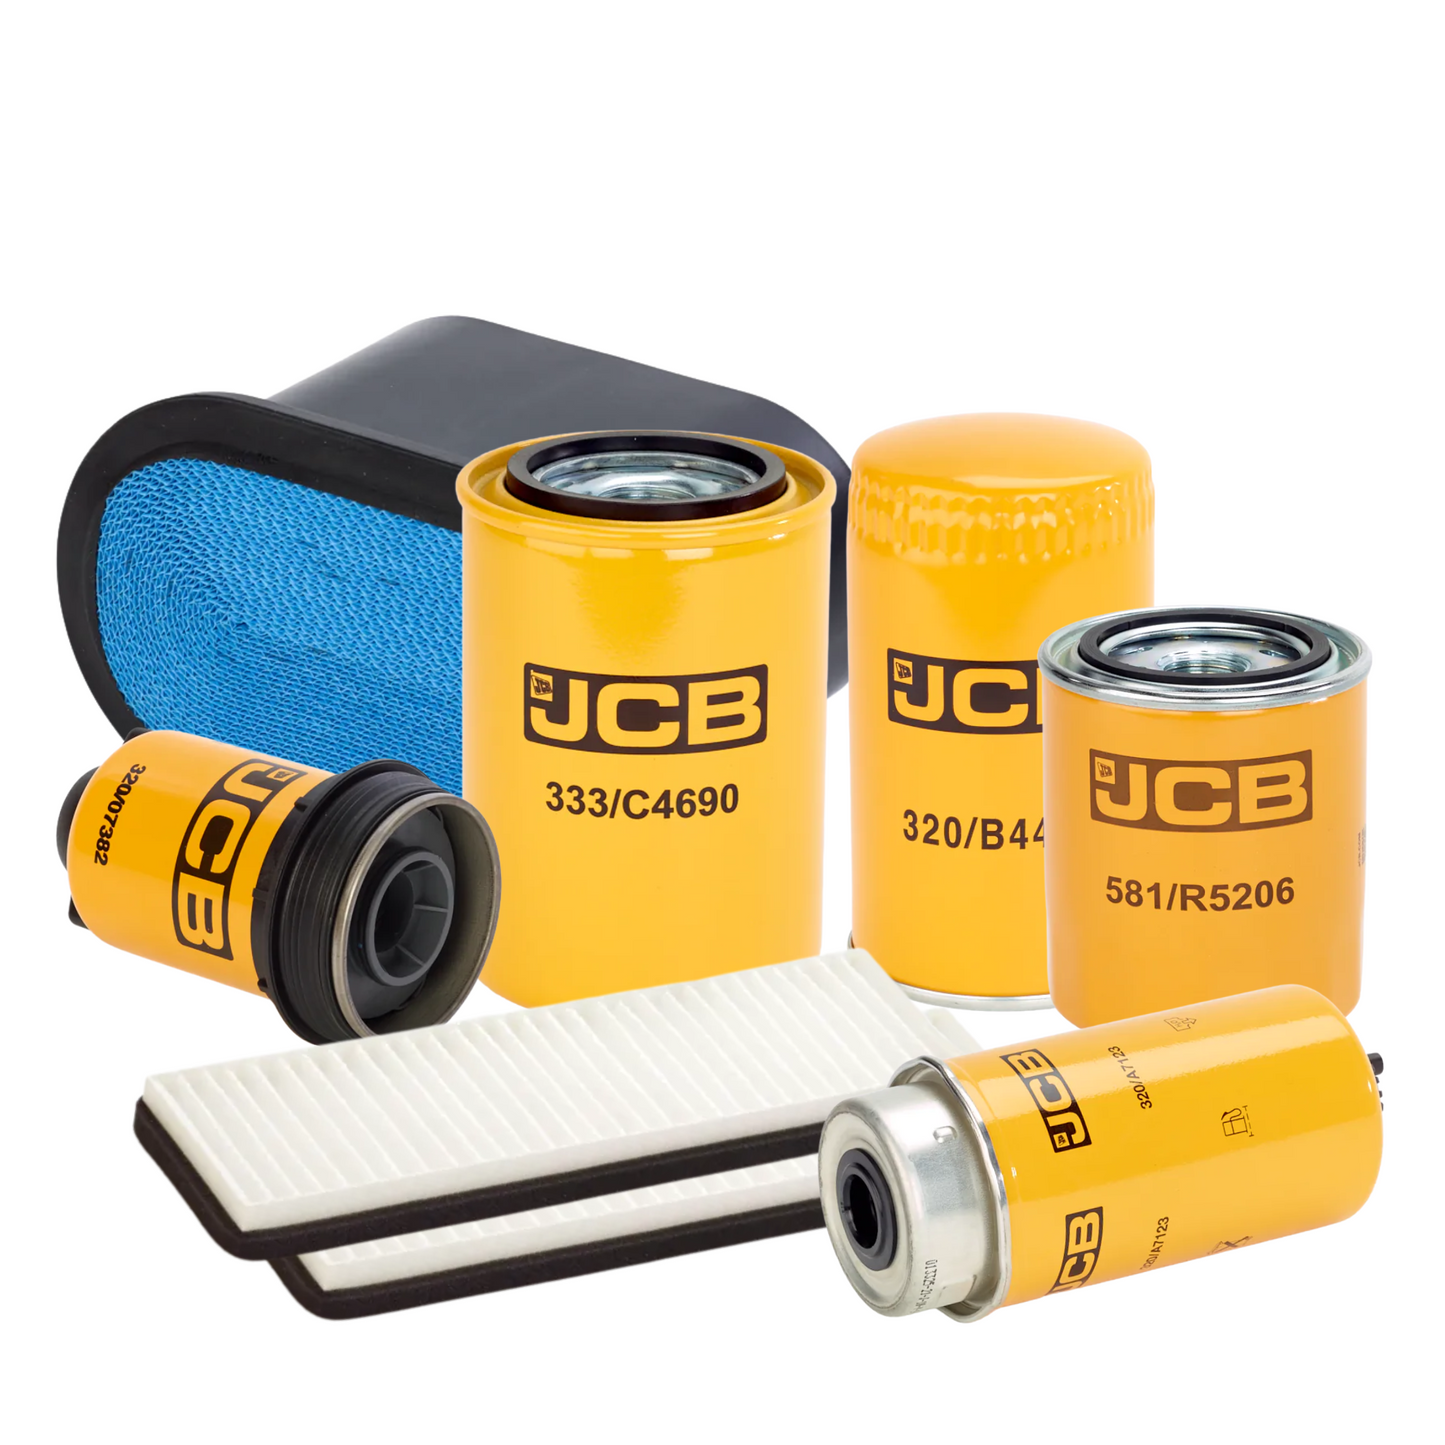 JCB 531-70 5000 Hour Filter Service Kit